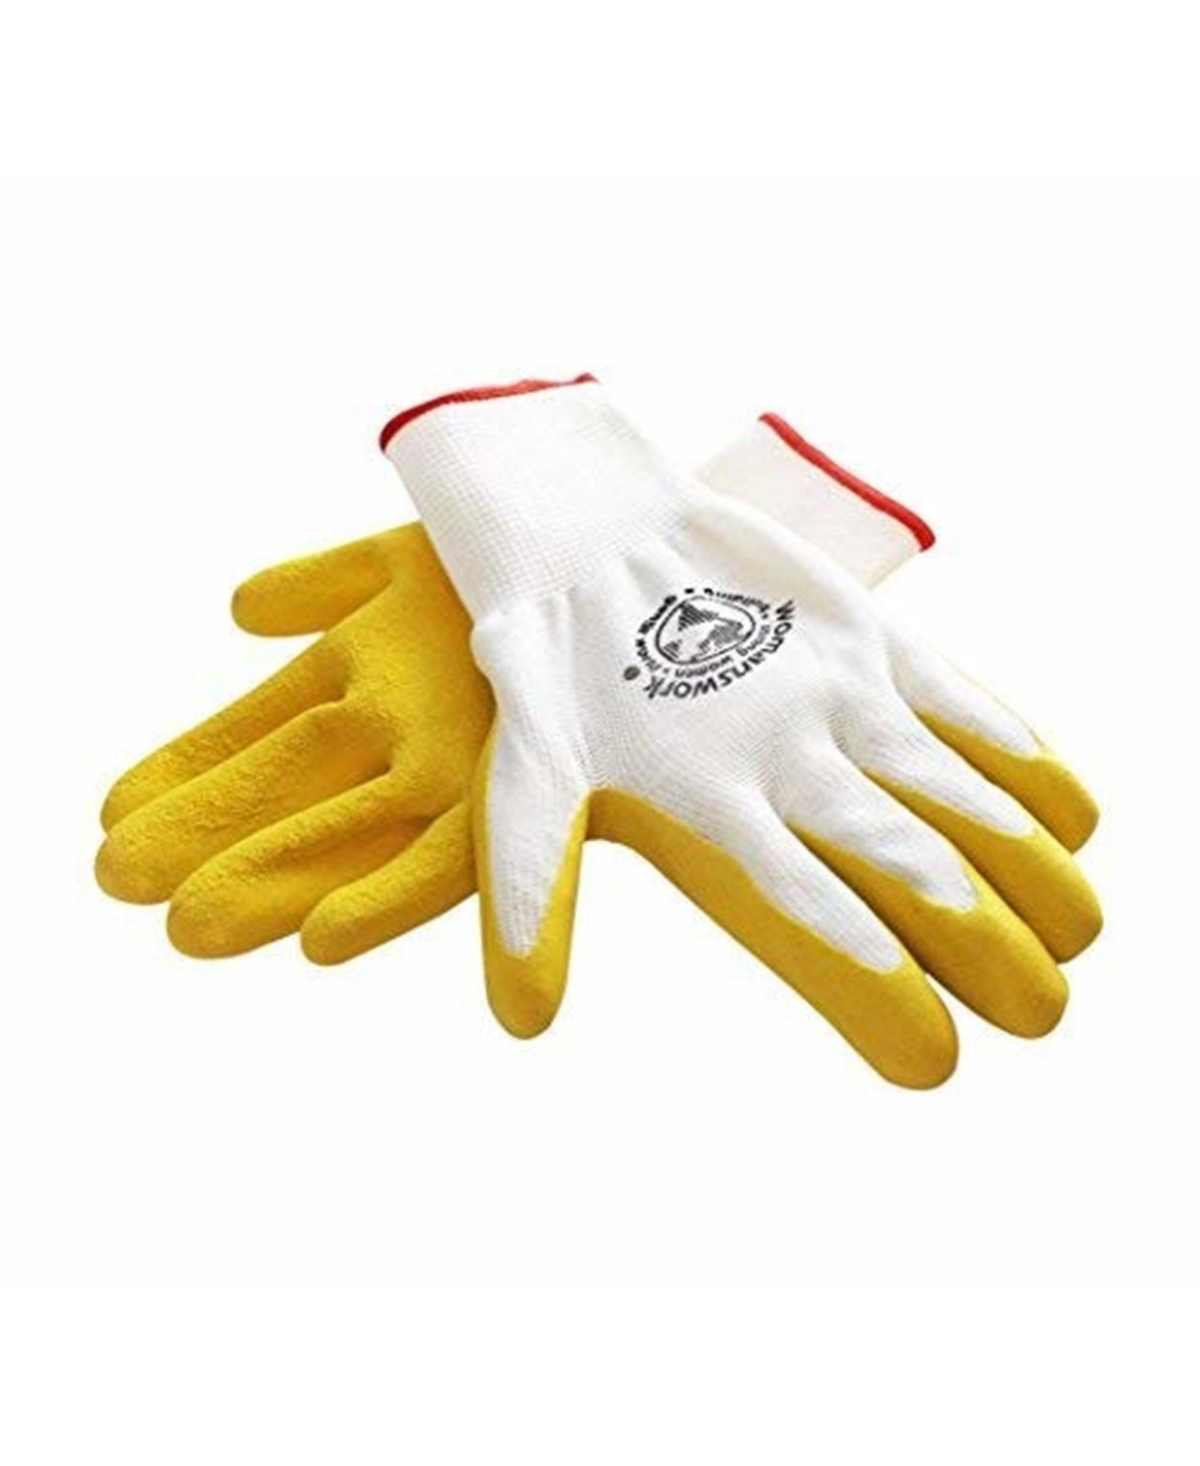 Gardening Protective Weeding Glove, Yellow, Large - Yellow